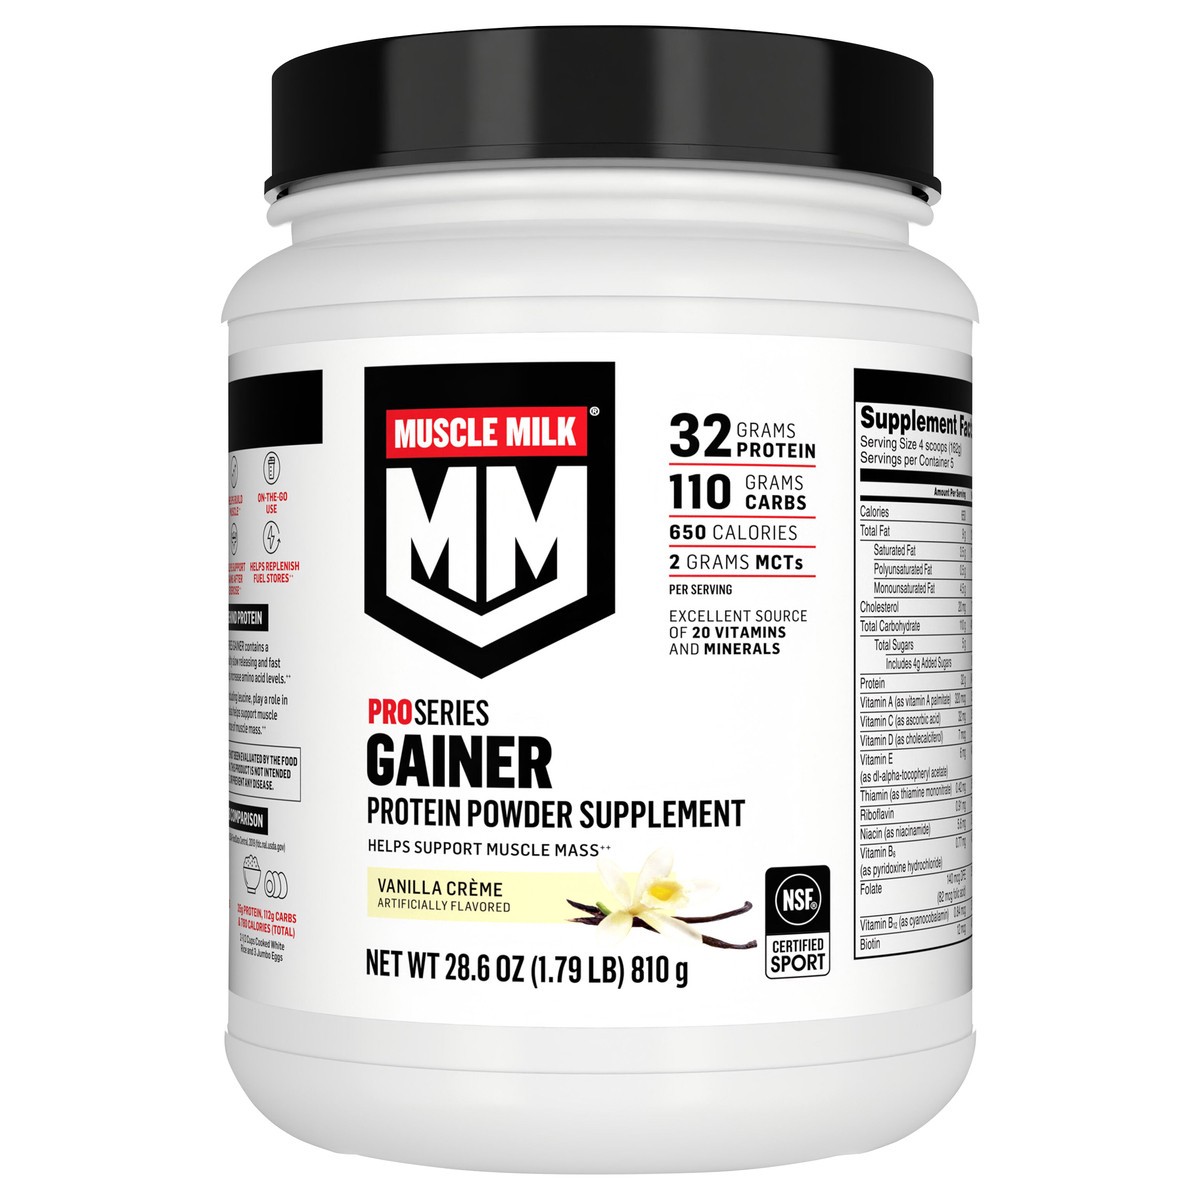 slide 7 of 7, Muscle Milk Pro Series Gainer Protein Powder Supplement Vanilla Creme Artificially Flavored 28.6 Oz, 28 oz